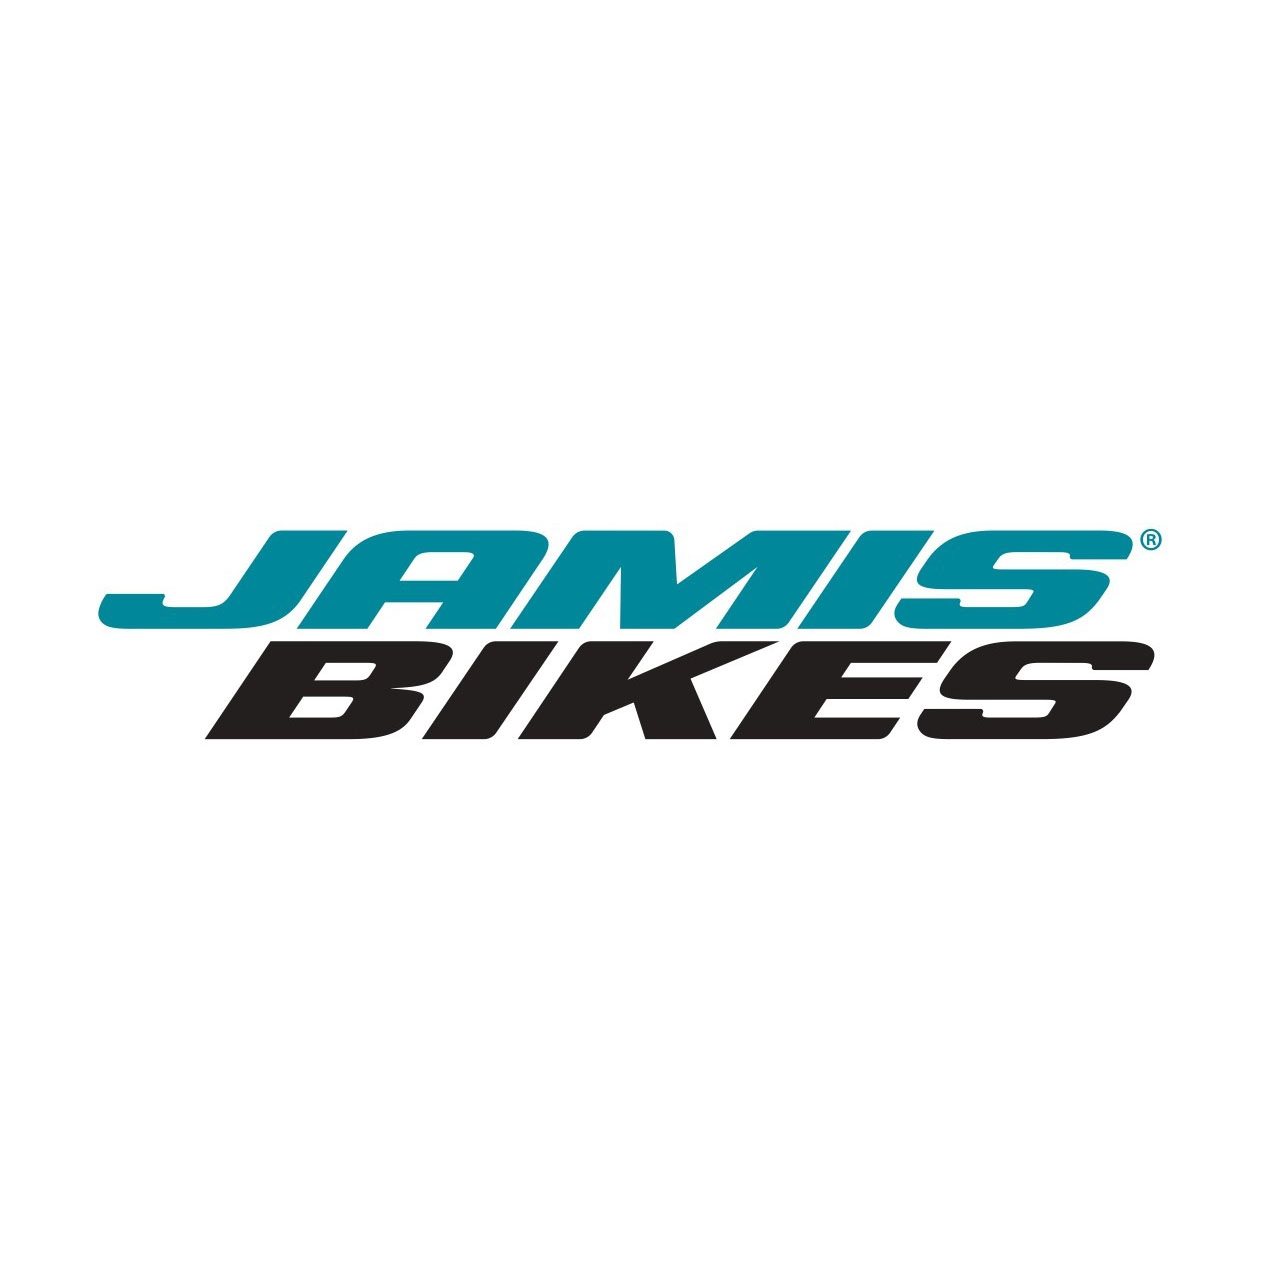 JAMIS BIKES (ジェイミスバイクス)LOGO Image